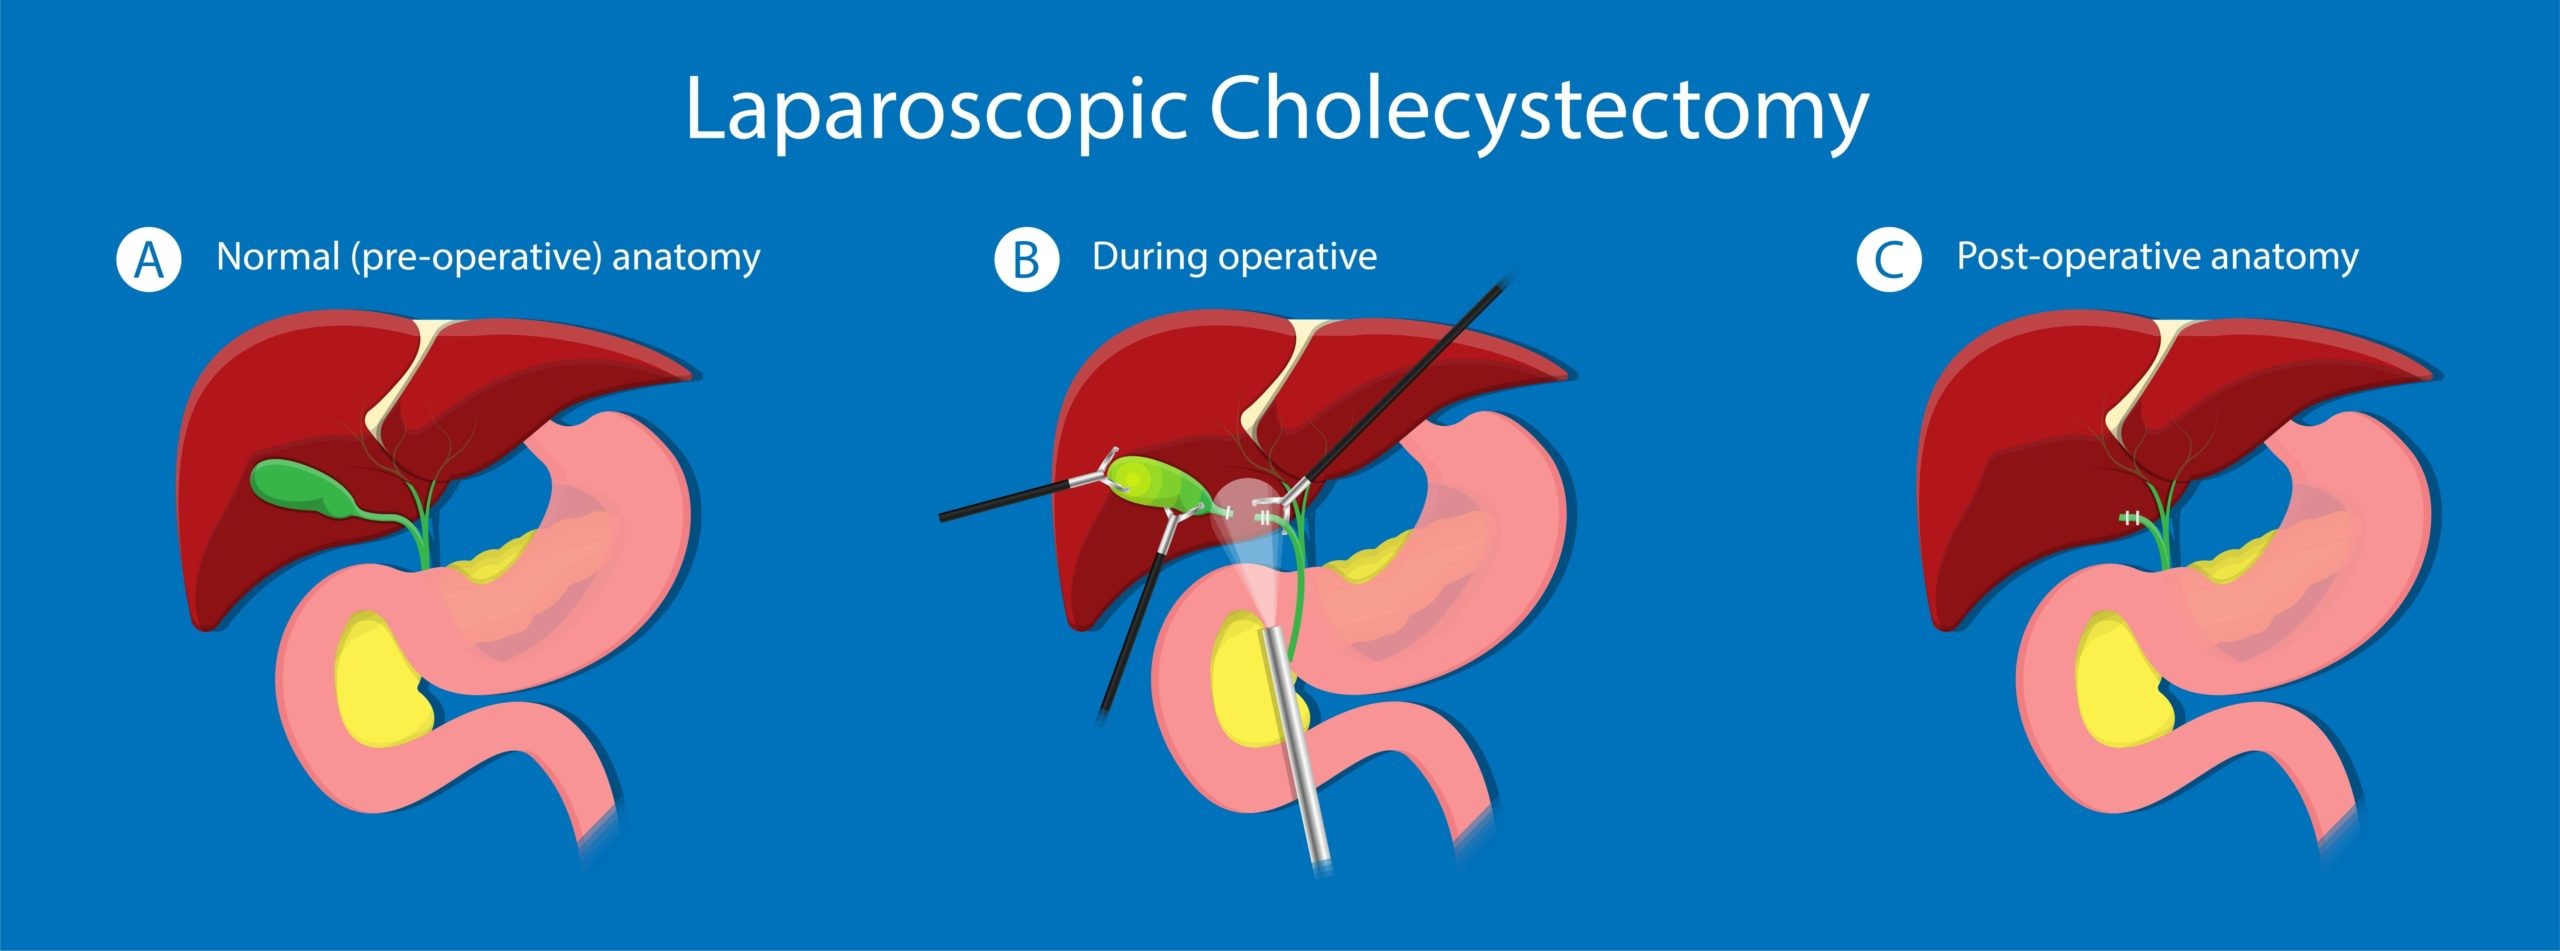 Gallstones cholecystectomy gallbladder removal surgery medical diagram 